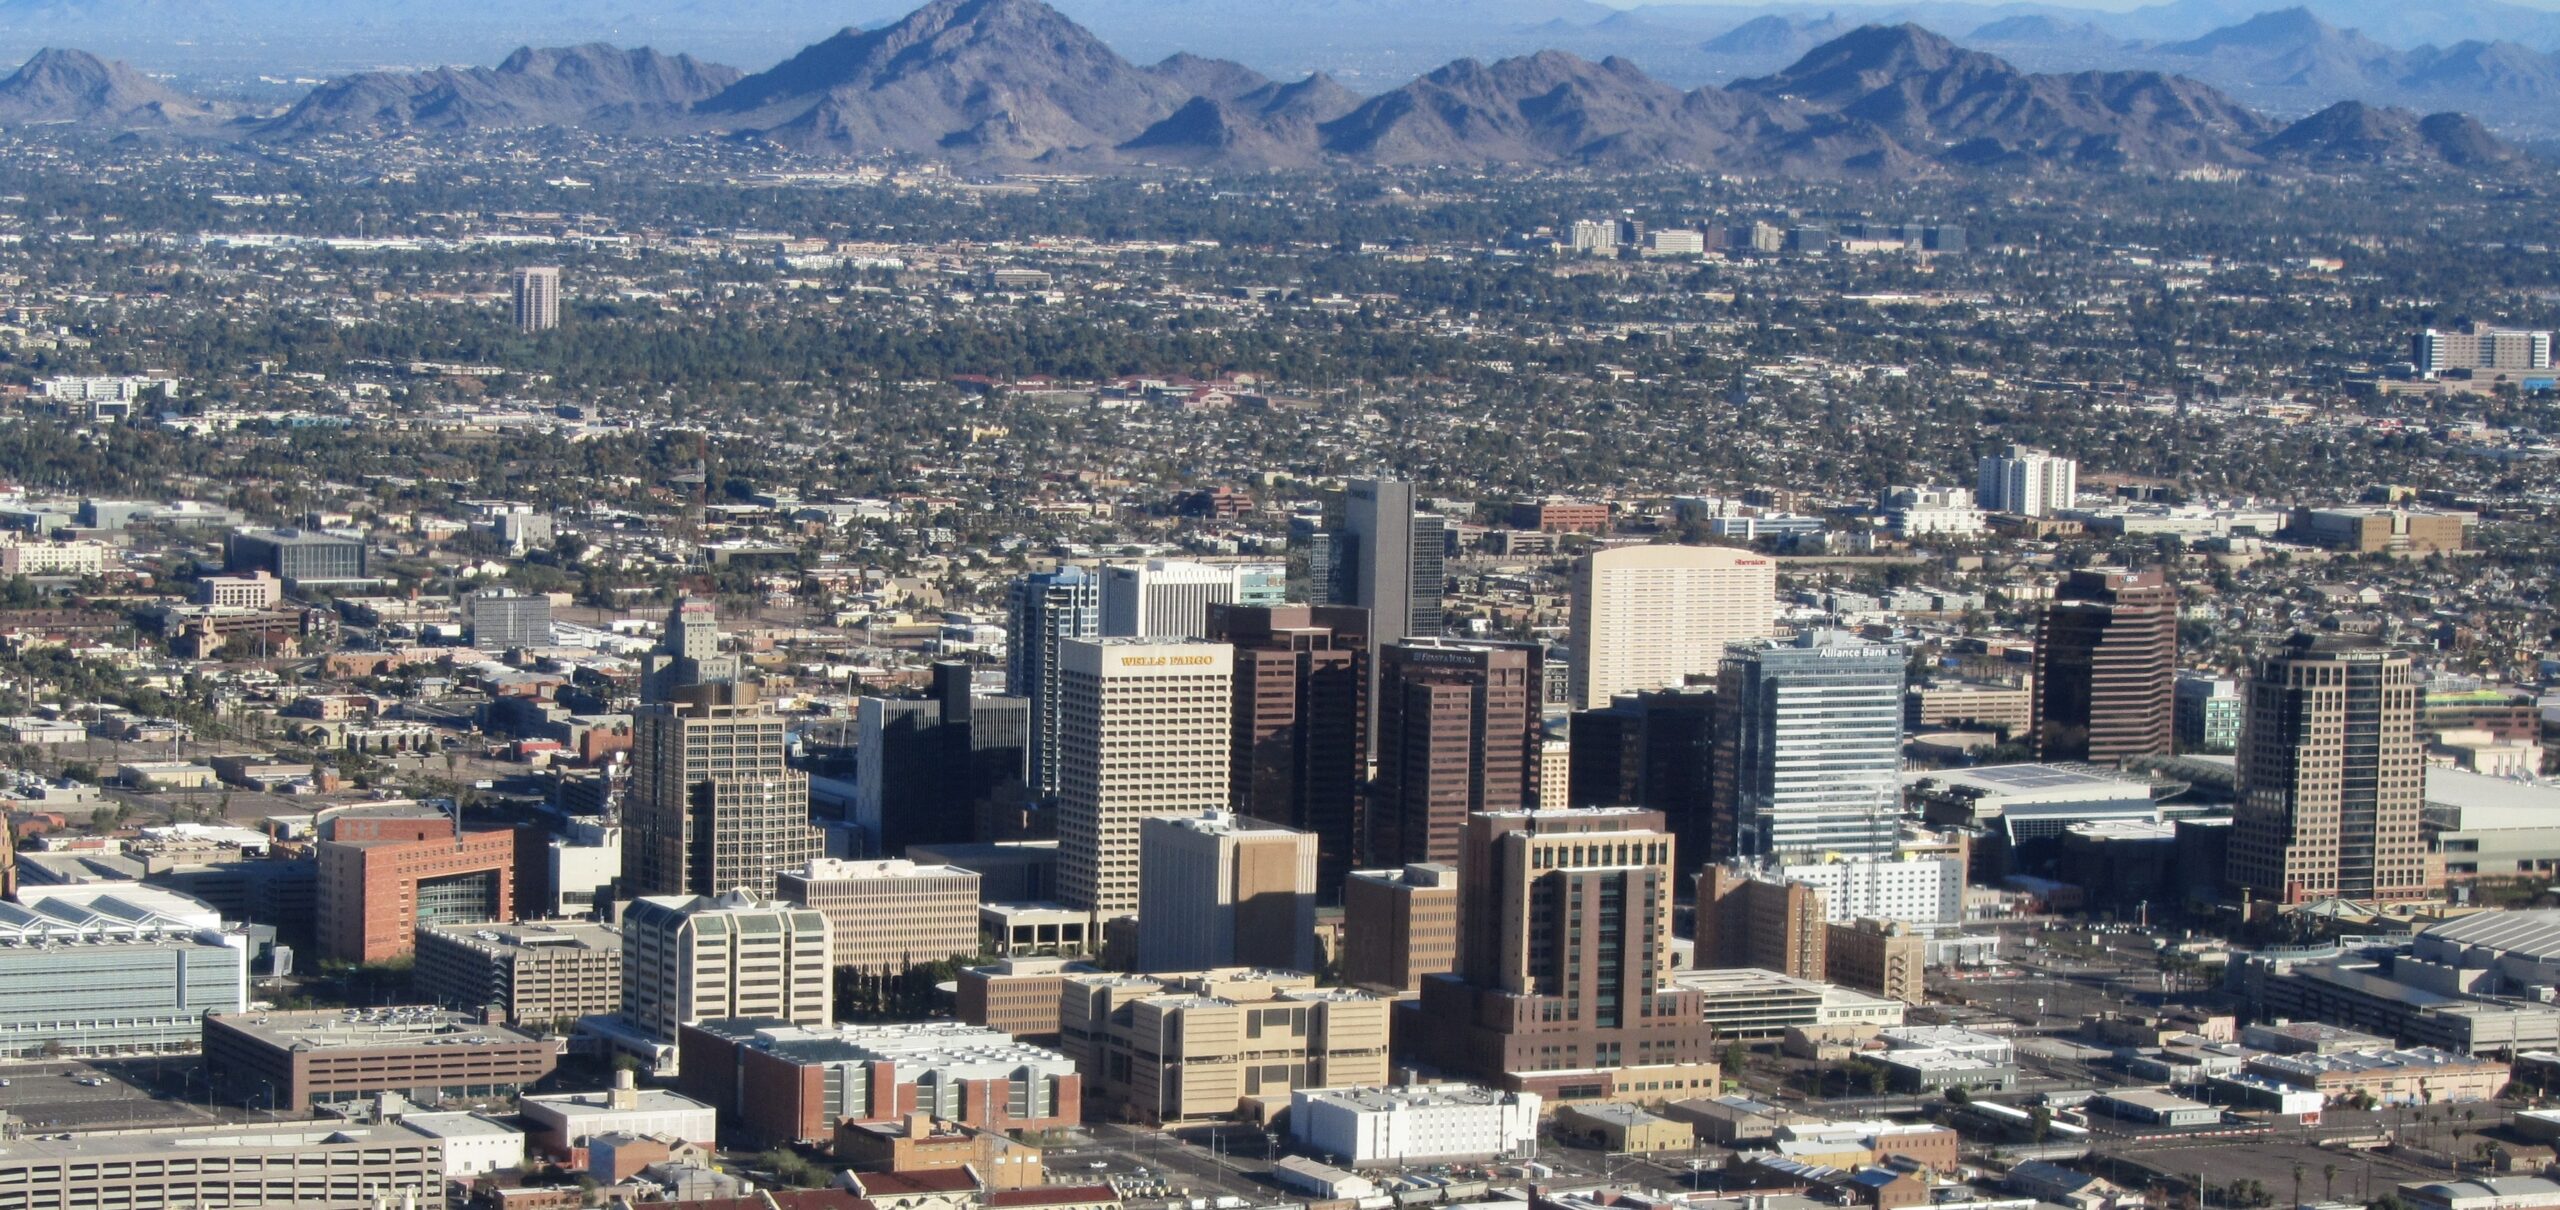 View of Buildings in downtown Phoenix Arizona